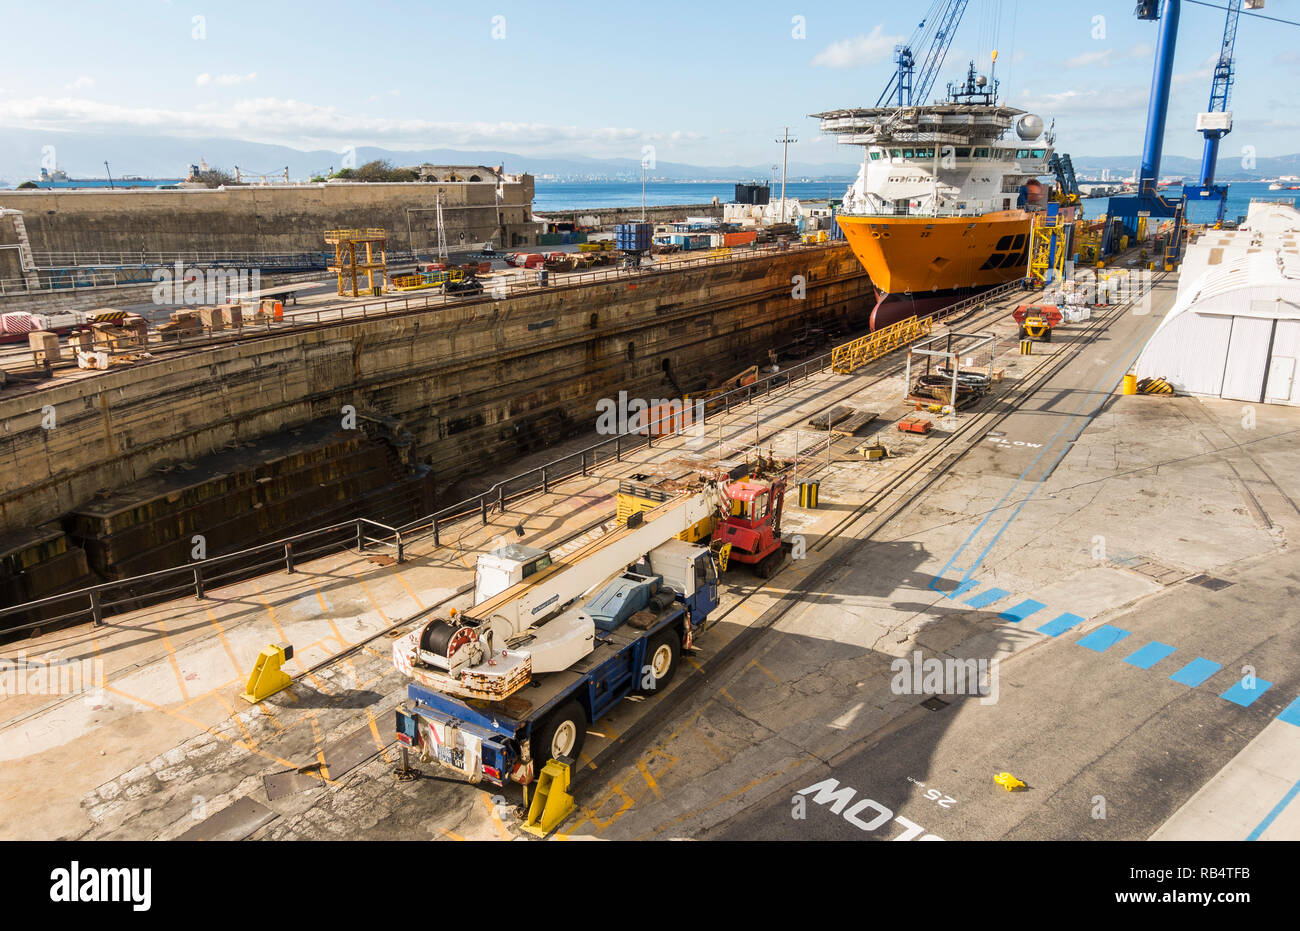 Gibraltar rock.Dry dock. SBM installer Vessel, support vessel being repaired in dry dock, British overseas territory of Gibraltar. Stock Photo